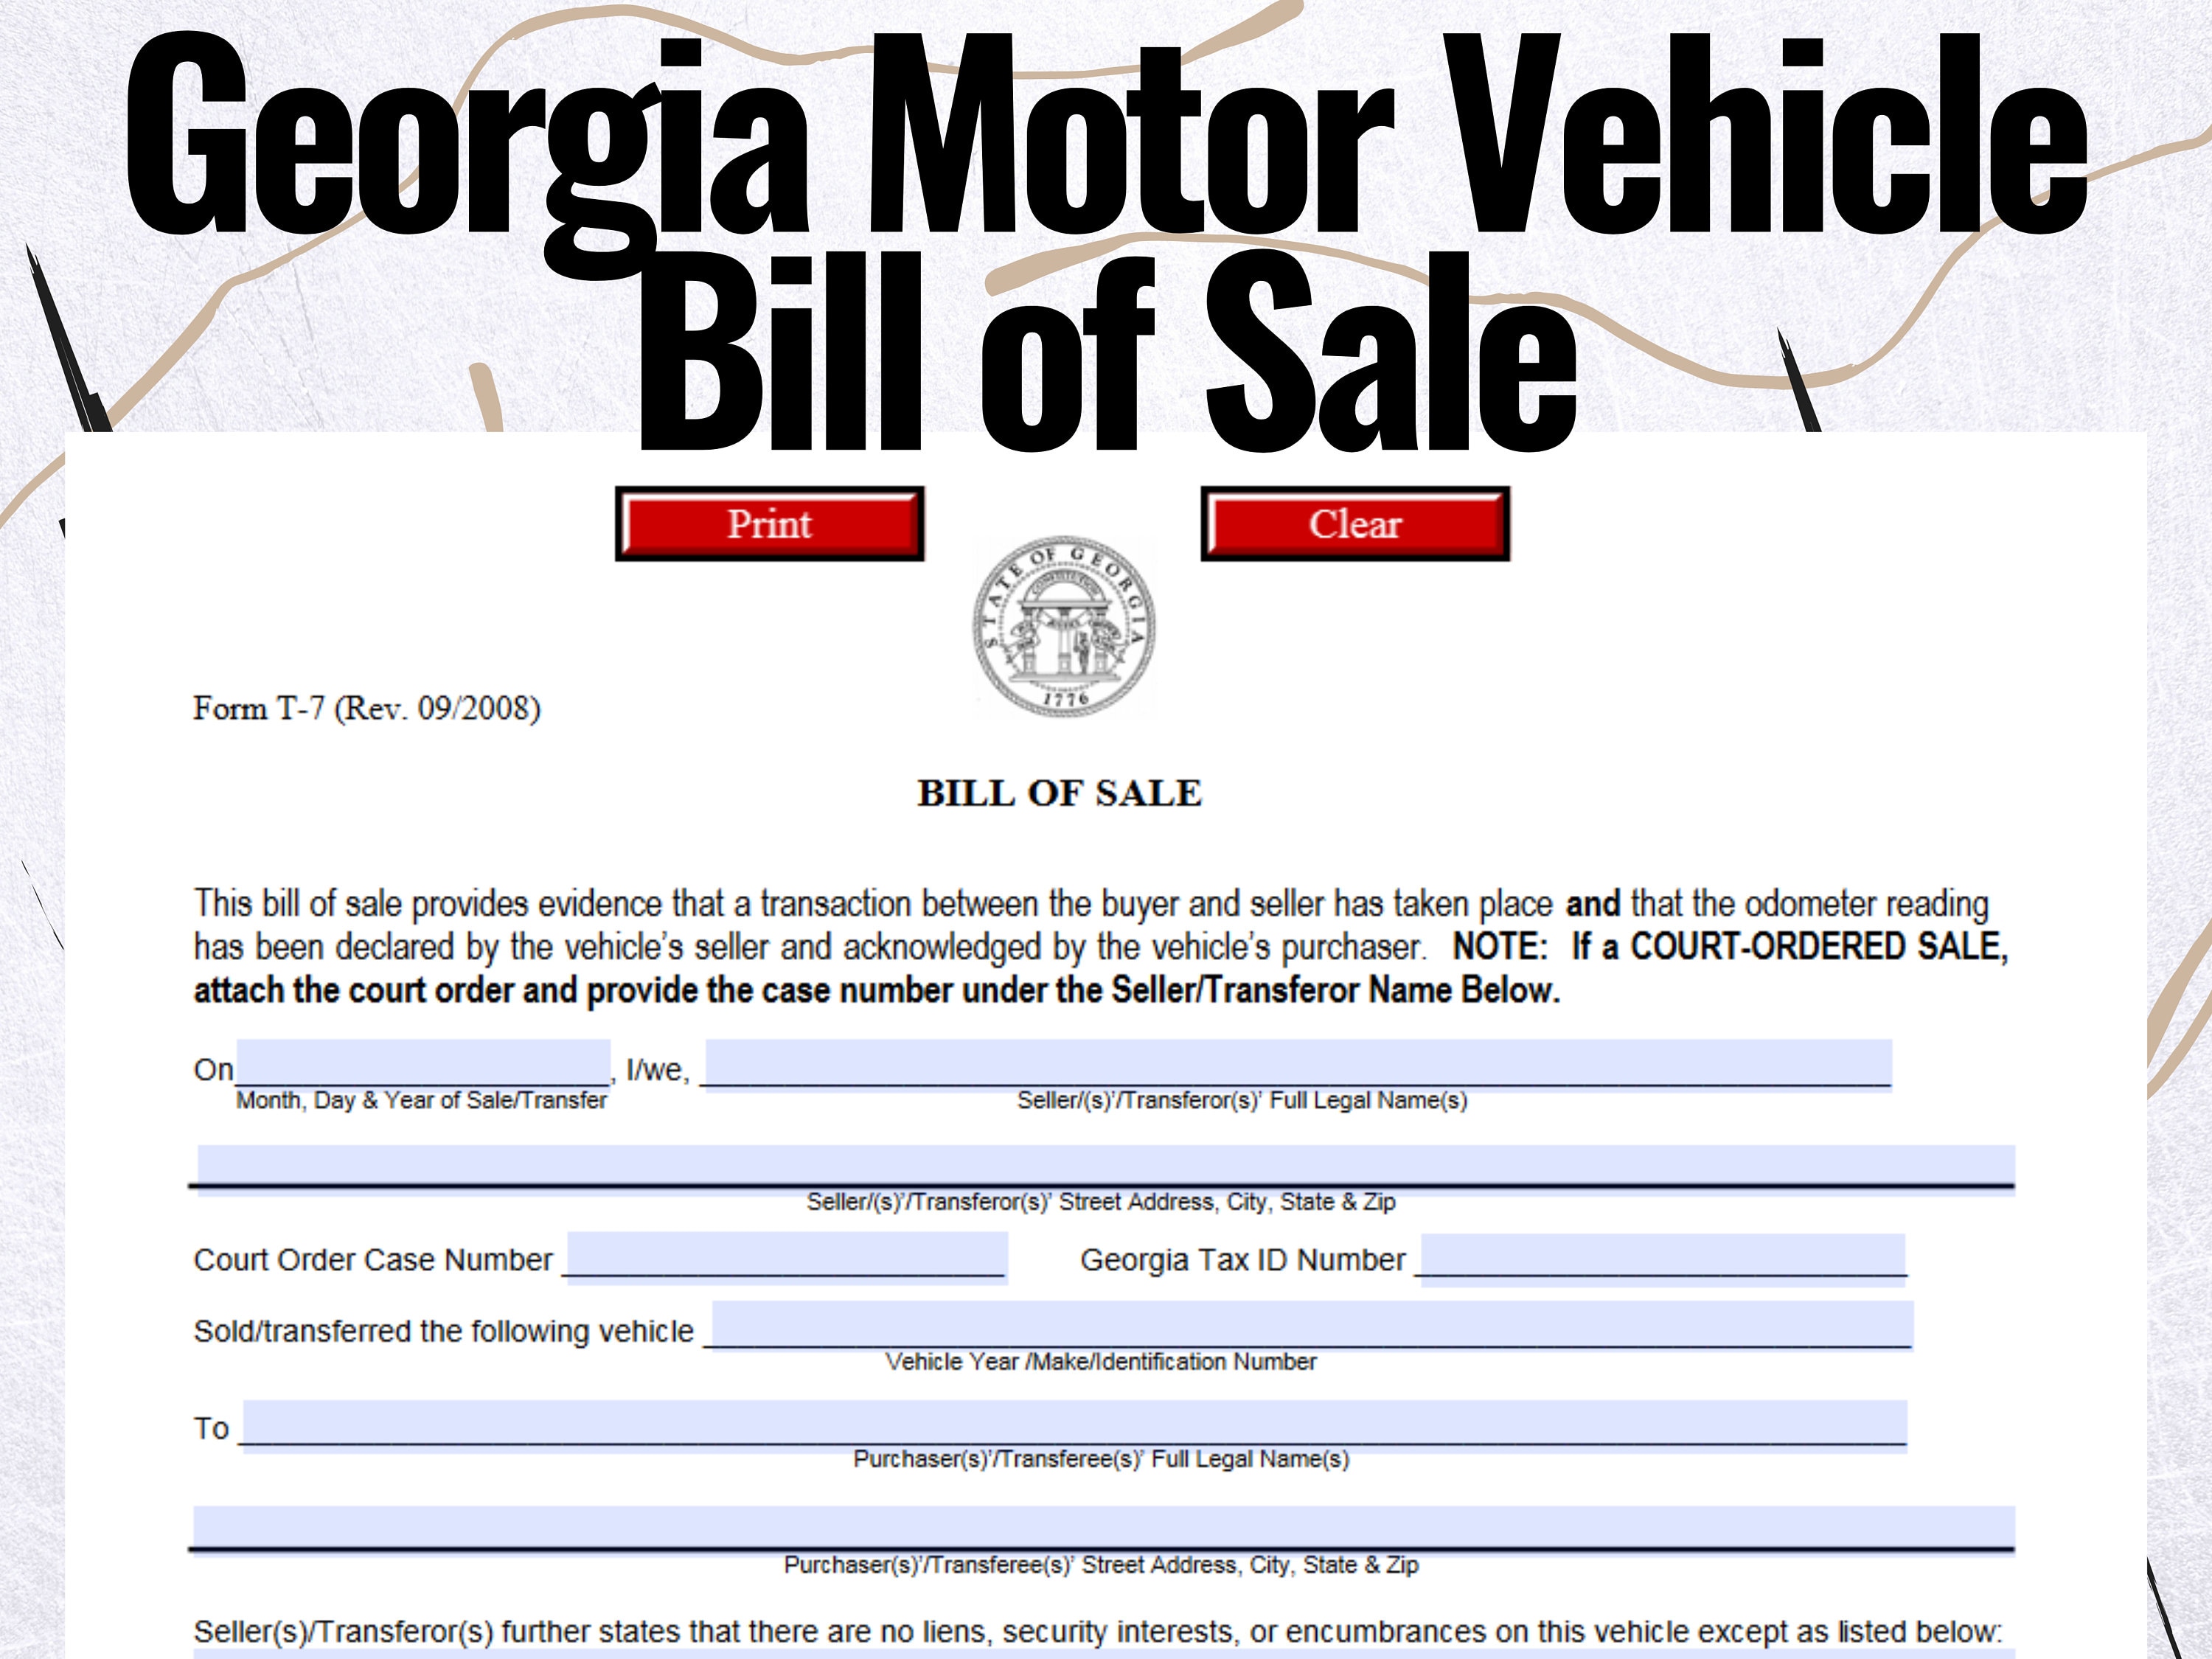 georgia-motor-vehicle-bill-of-sale-georgia-motor-vehicle-bill-of-sale